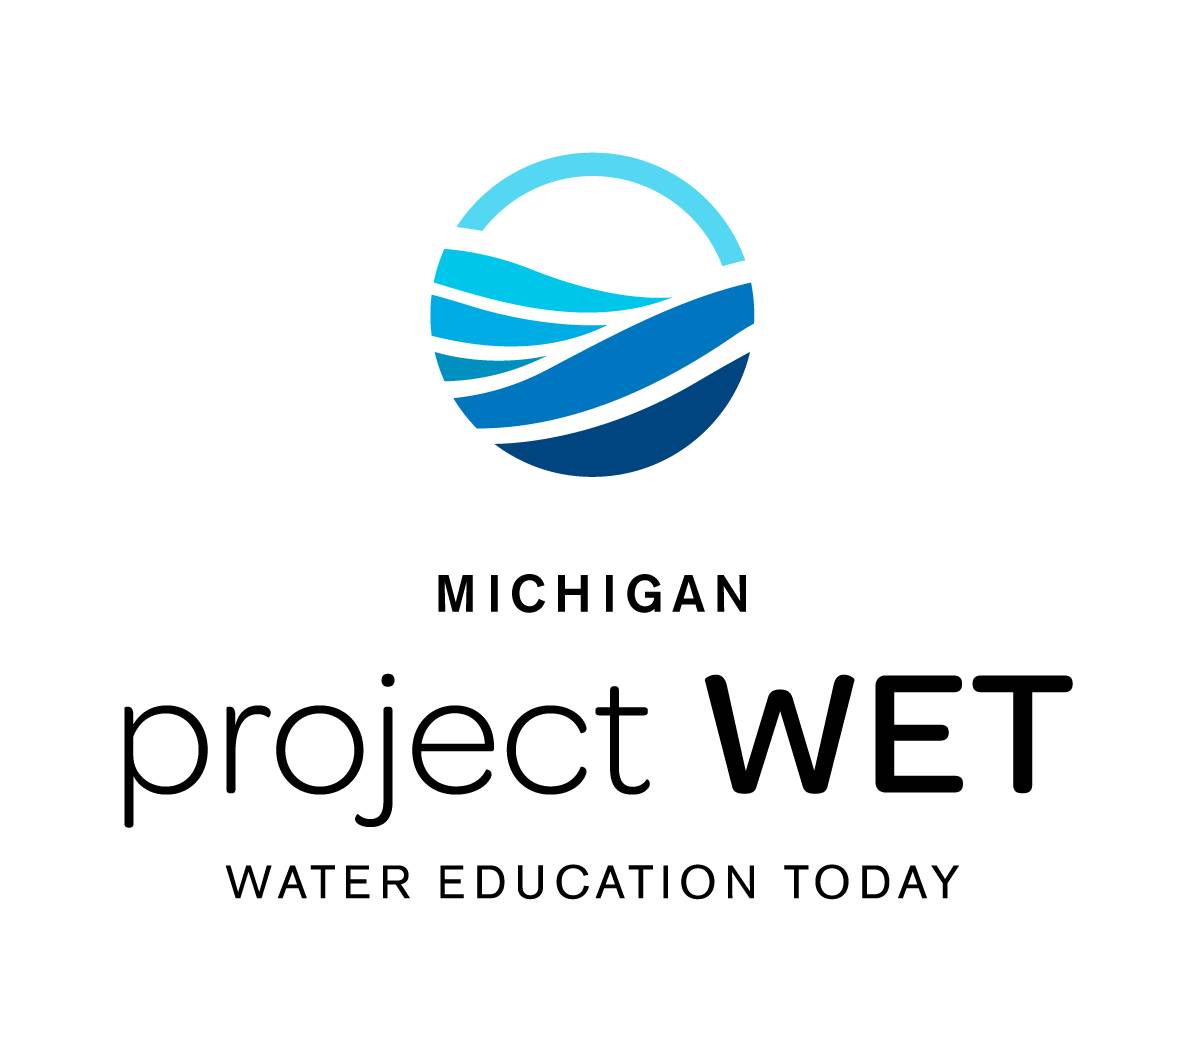 Project WET logo